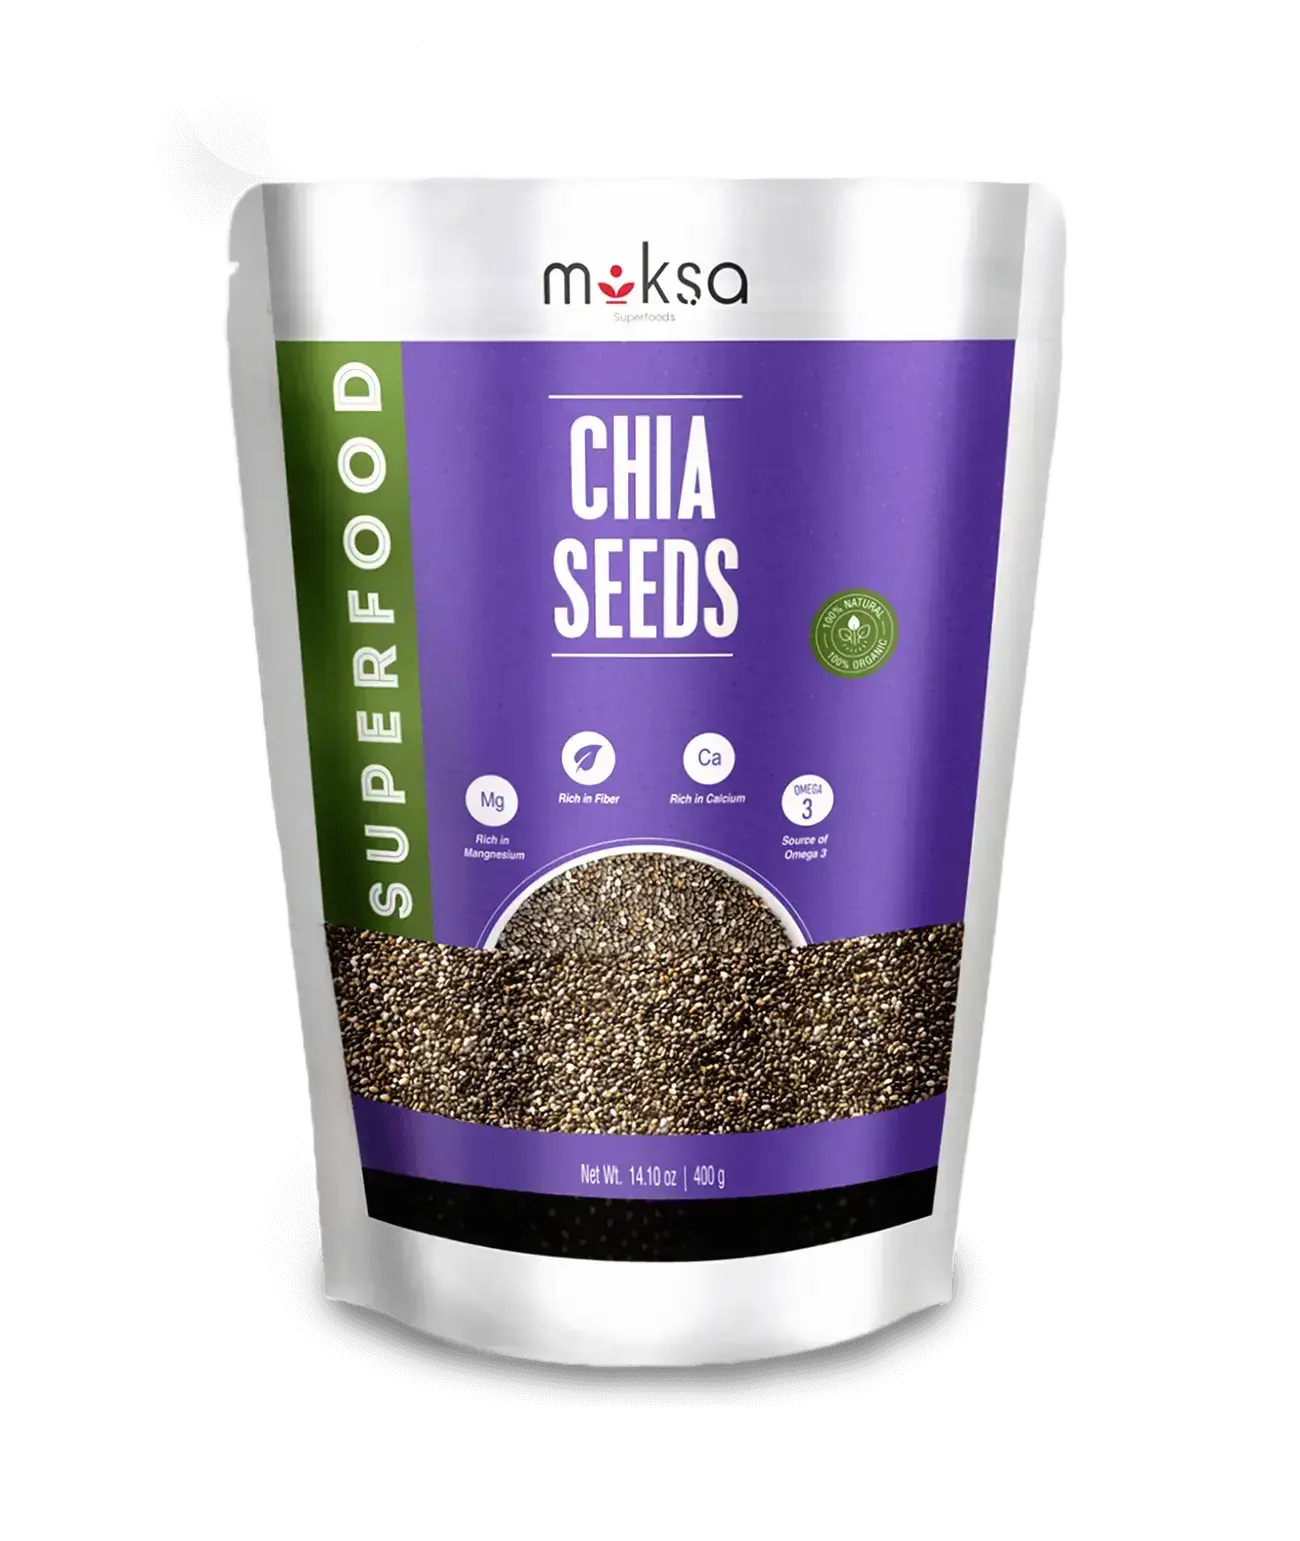 Organic Chia Seeds